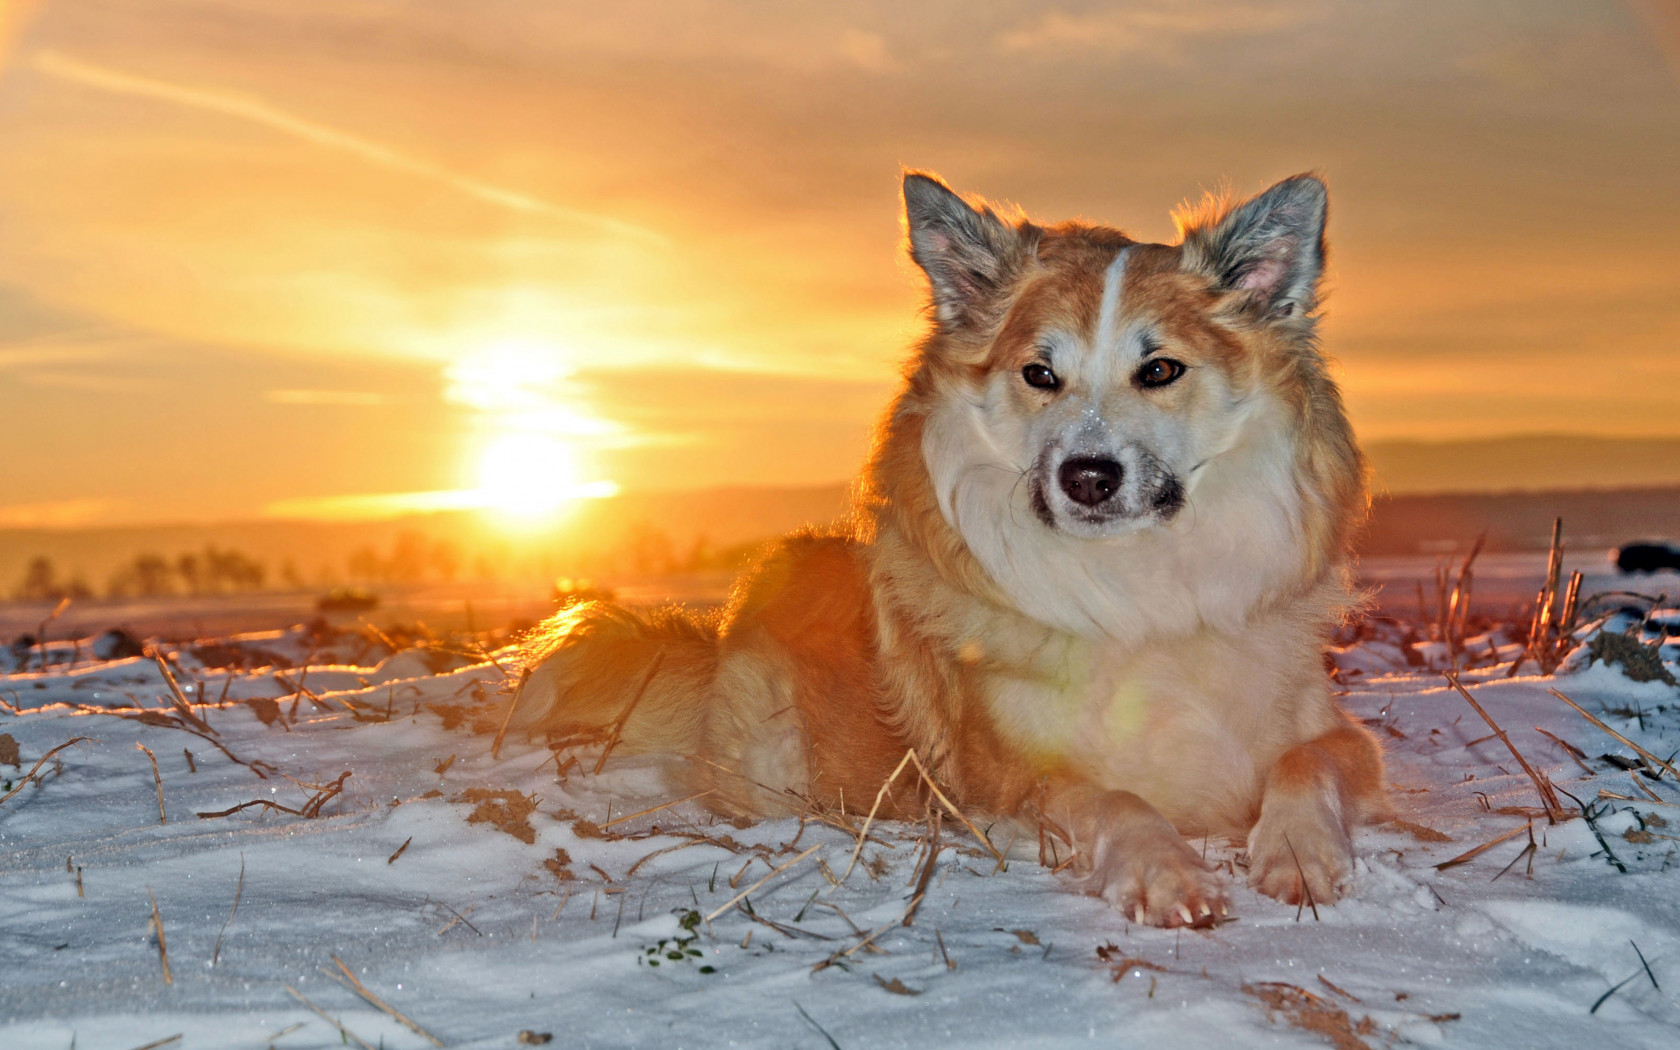 Islandia i pies na śniegu